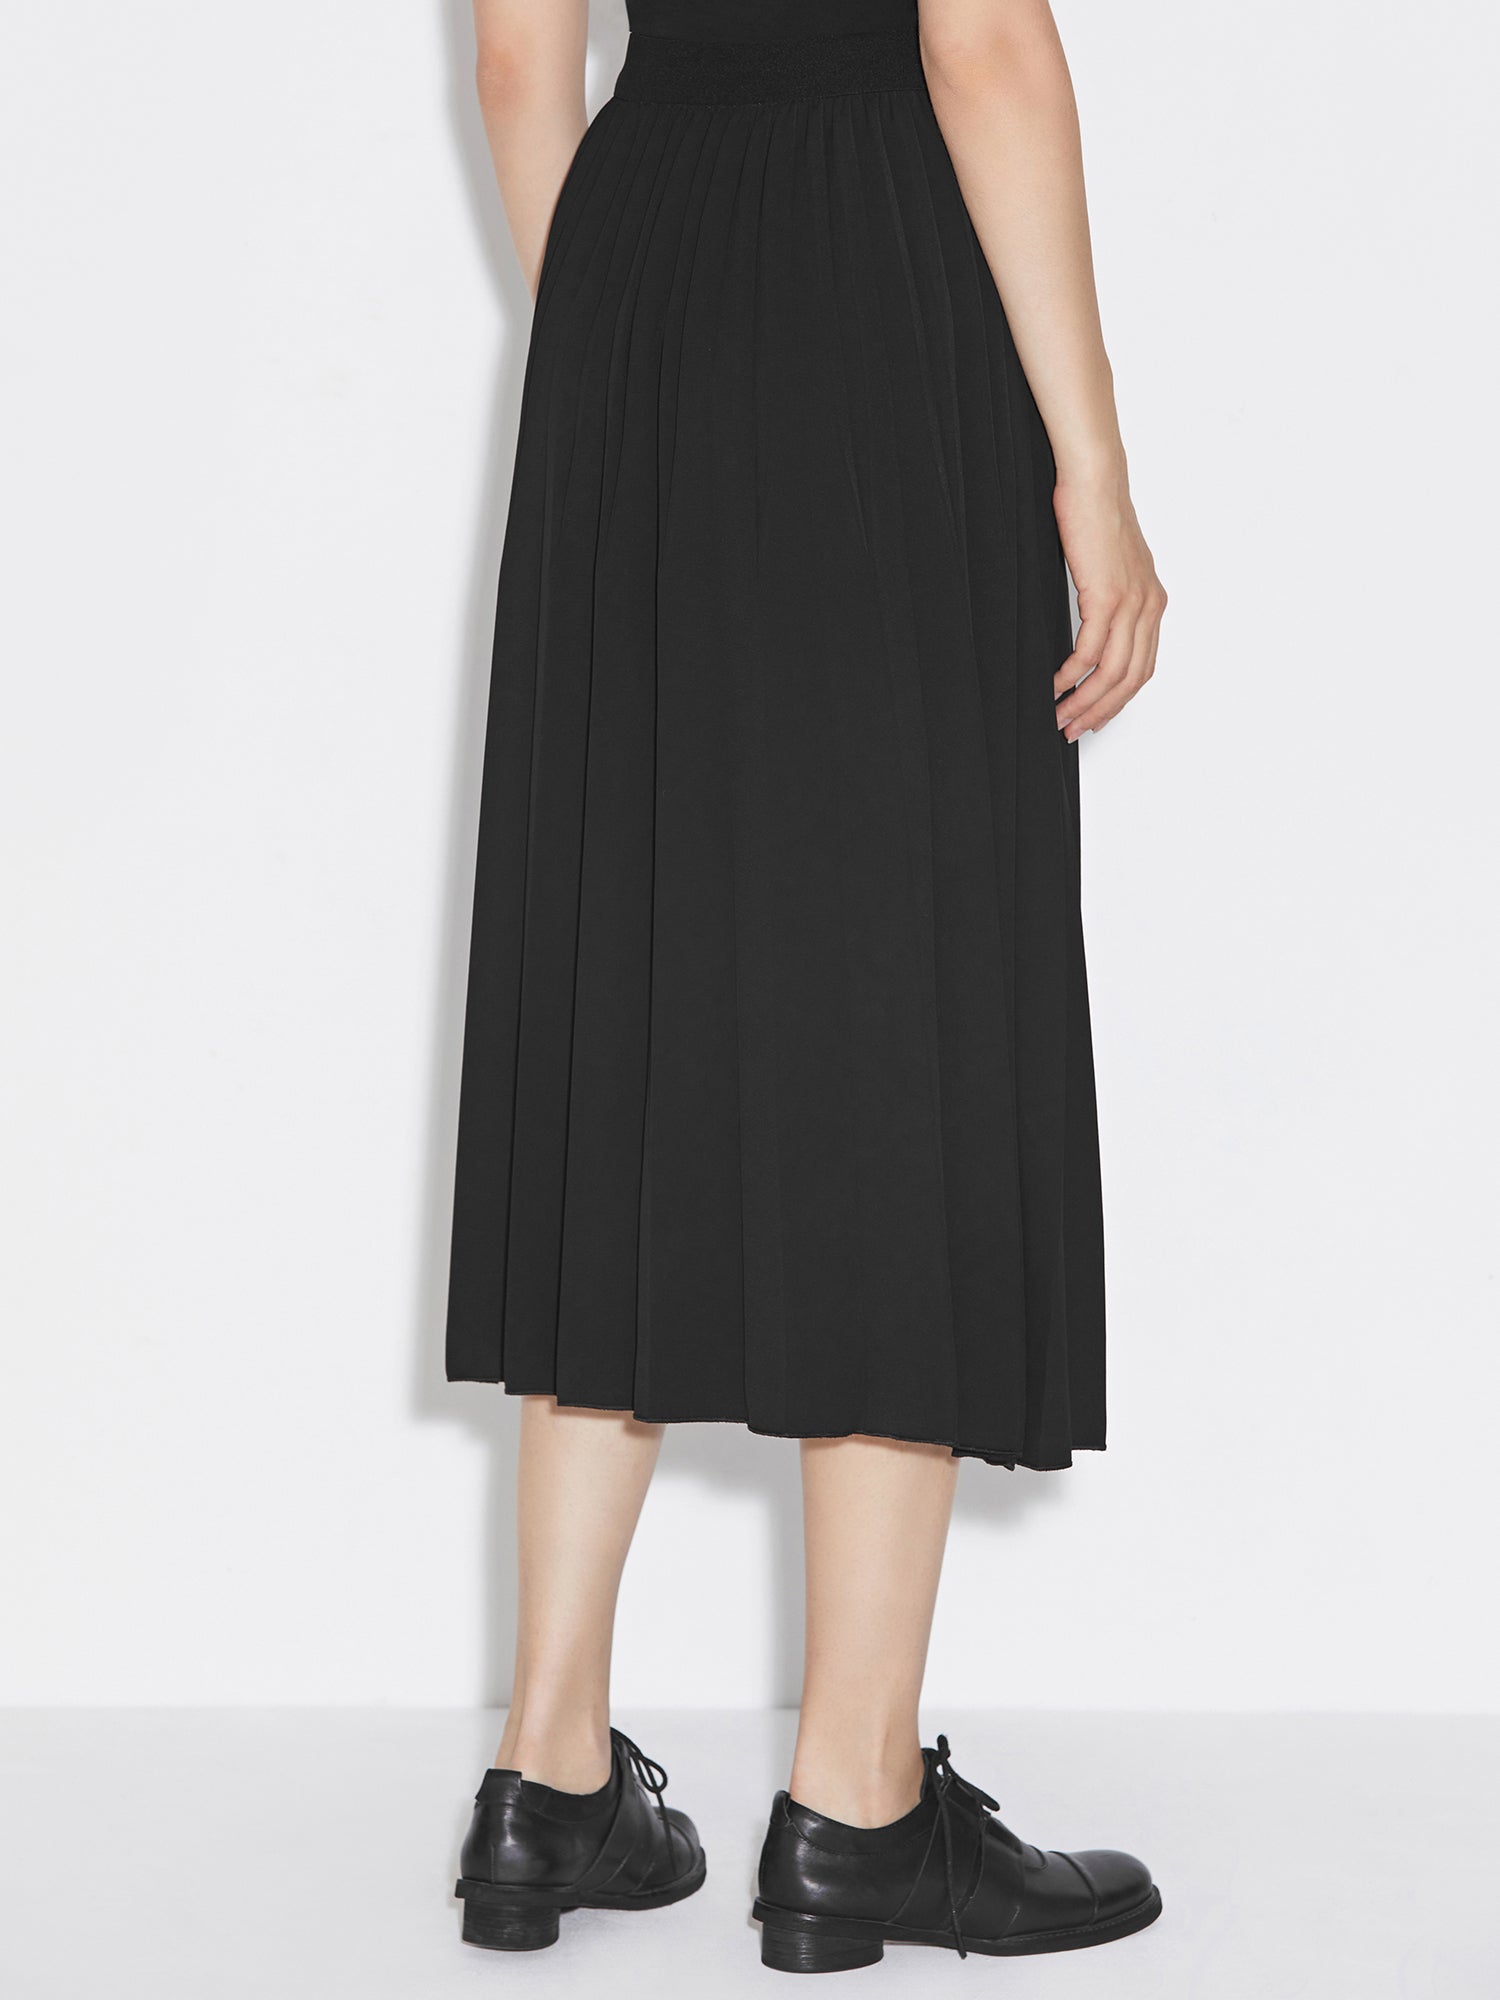 Elastic Gathered Black A-Line Maxi Skirt